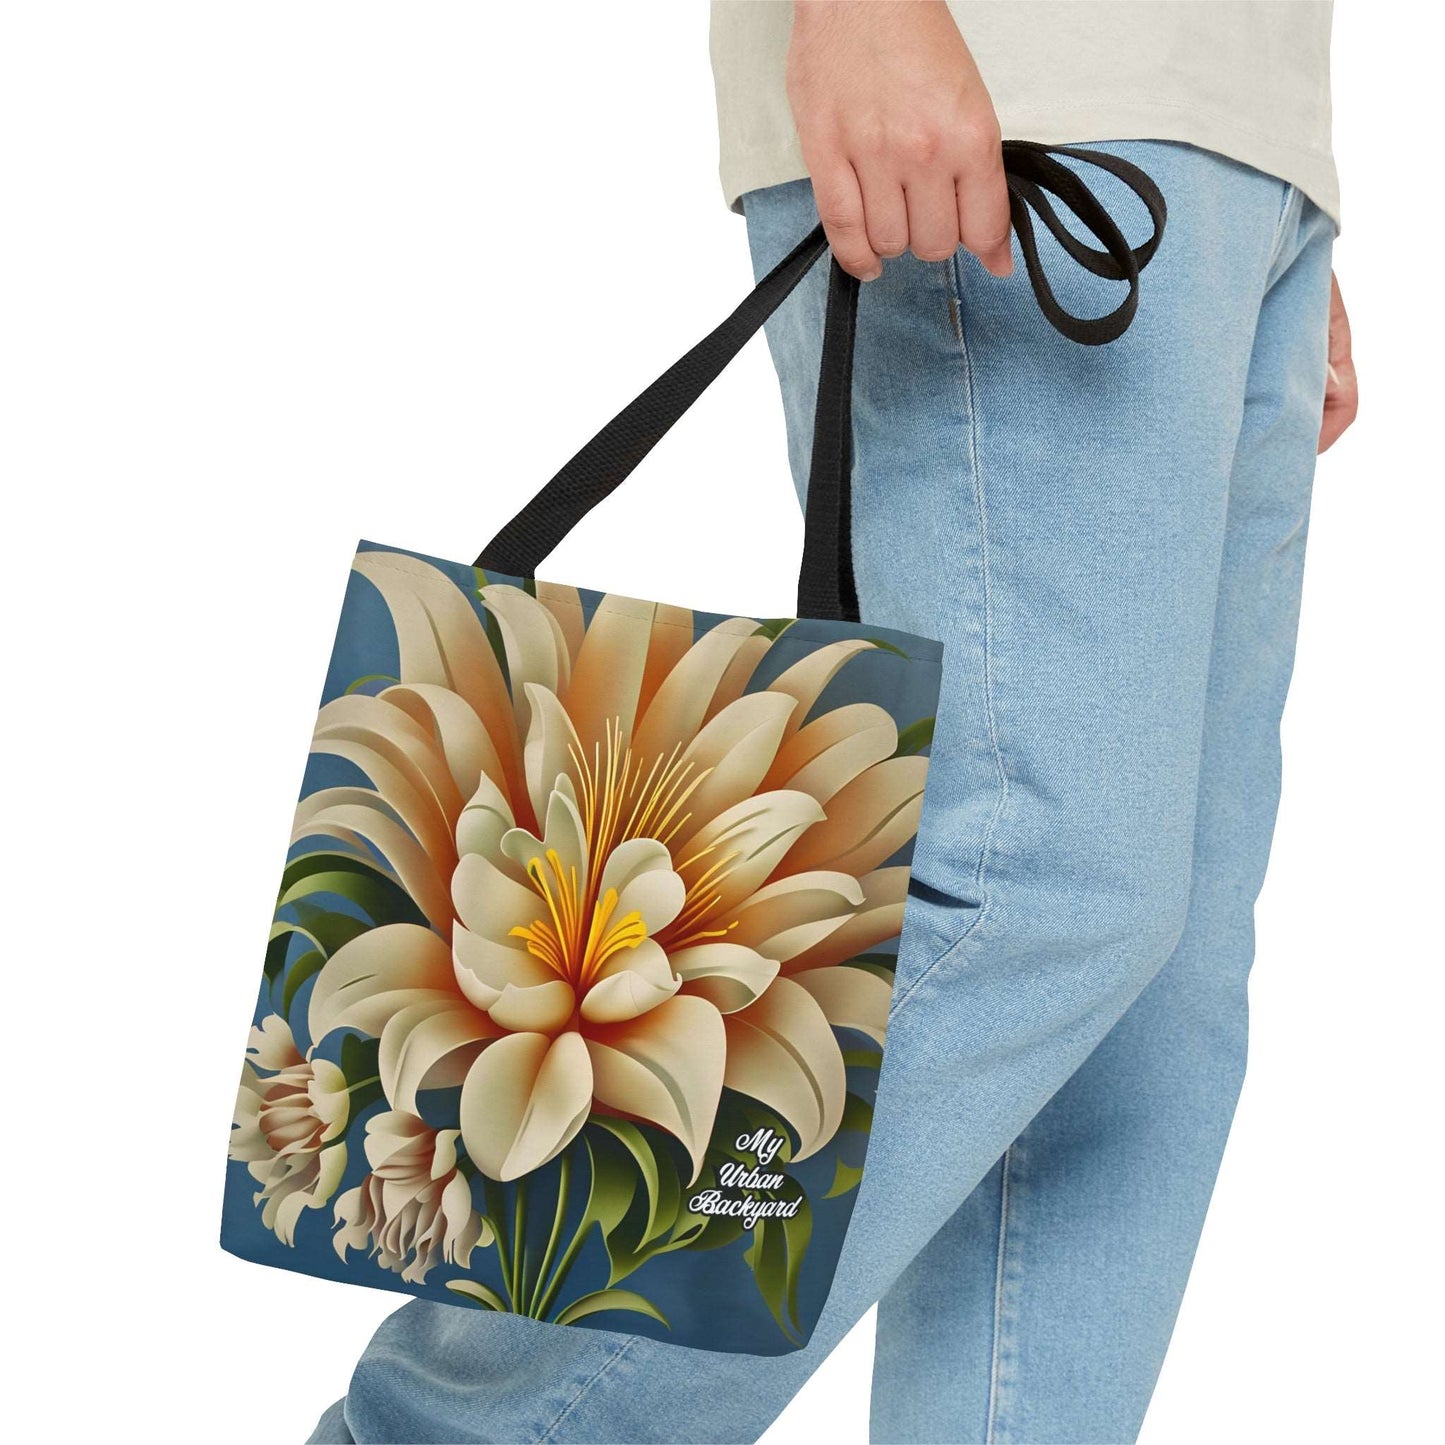 Everyday Tote Bag w Cotton Handles, Reusable Shoulder Bag, Large White Flower